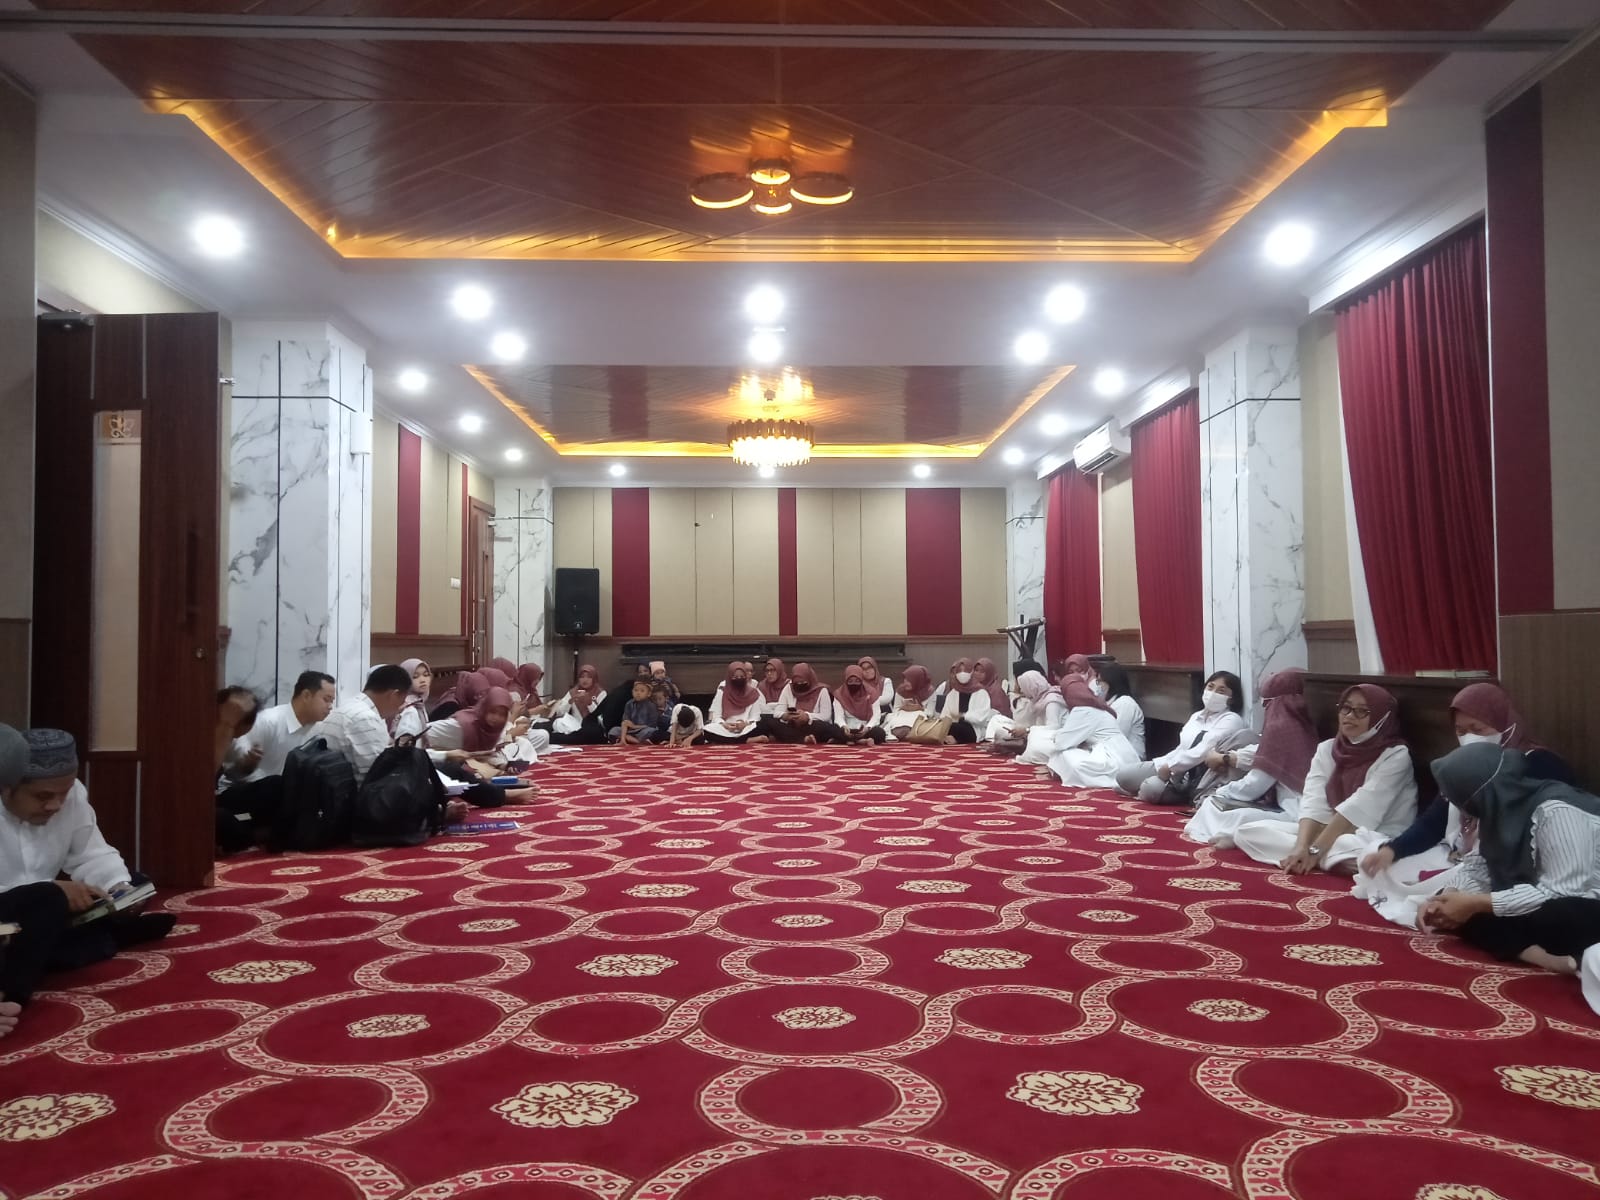 Politeknik Indonusa Surakarta Organizes Al-Qur’an Completion and Iftar Gathering